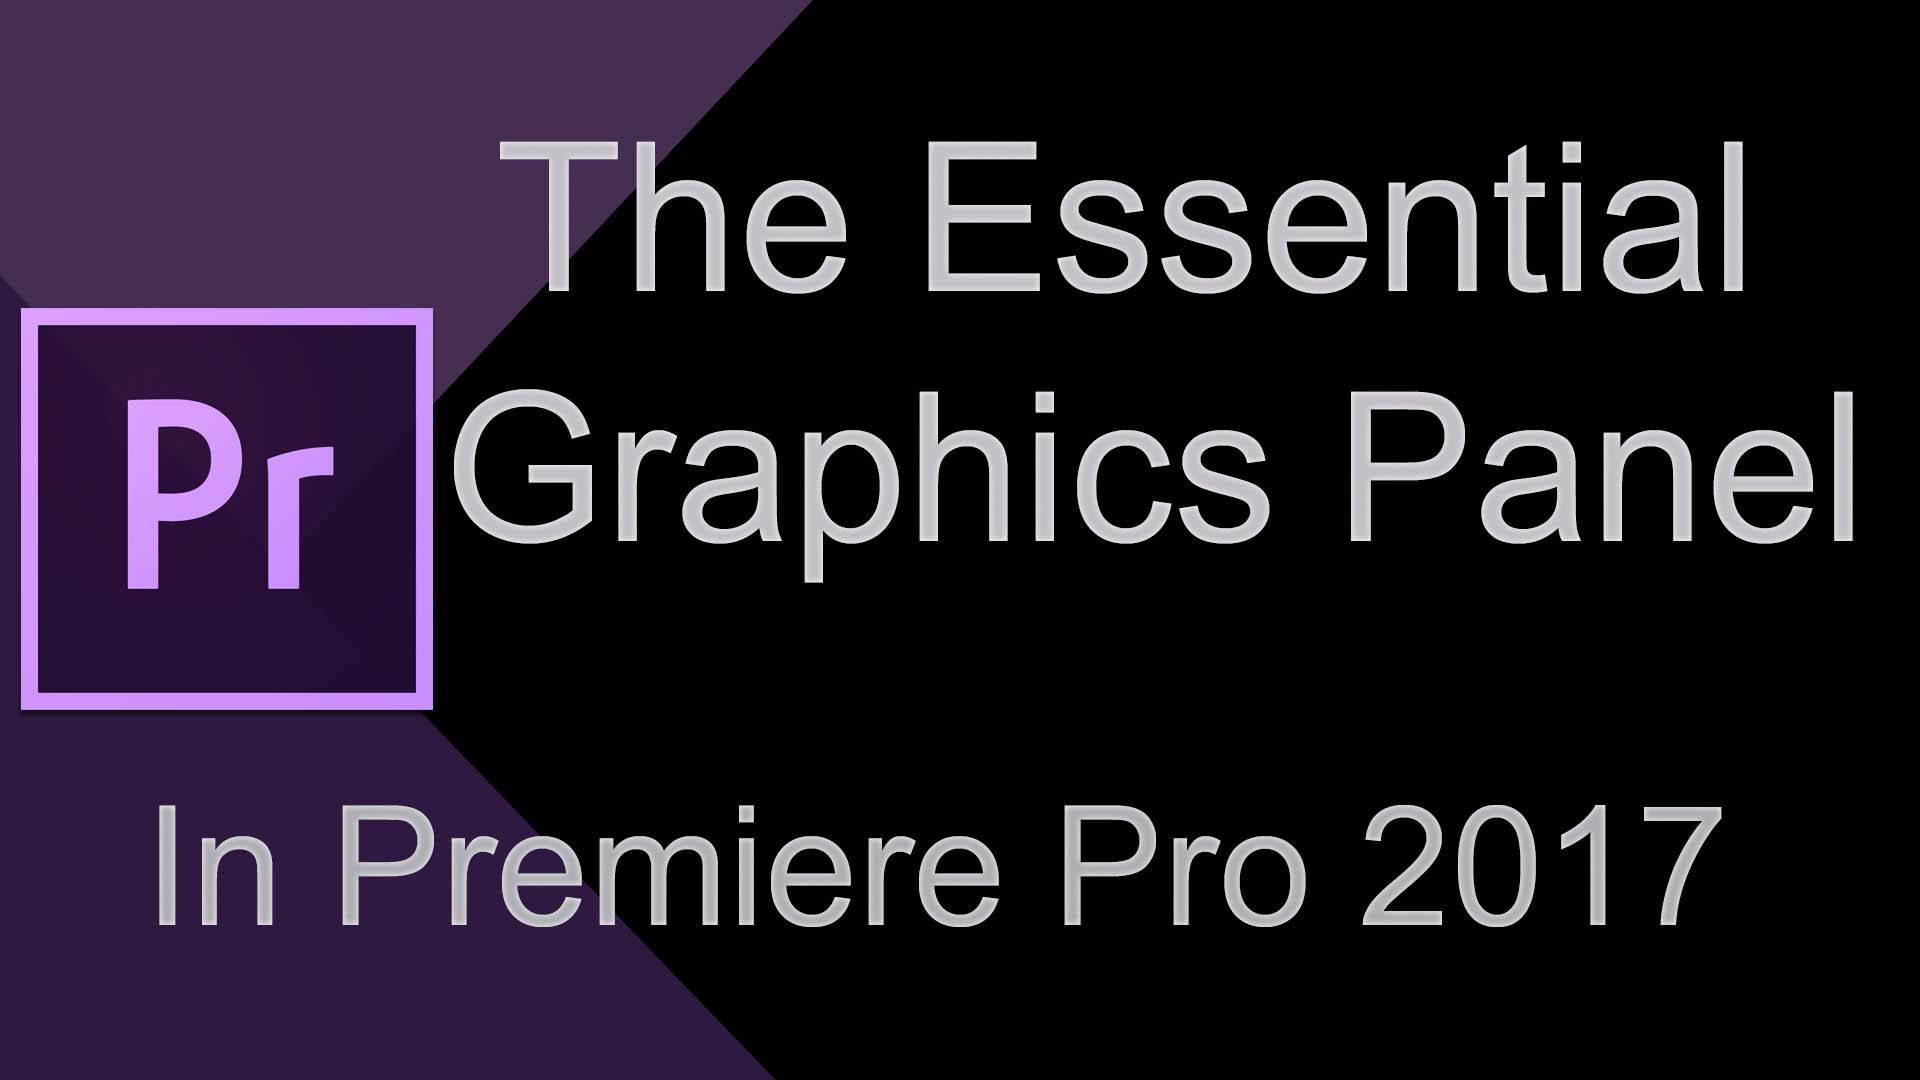 Adobe Premiere Pro Cc 2017 Essential Graphics Update